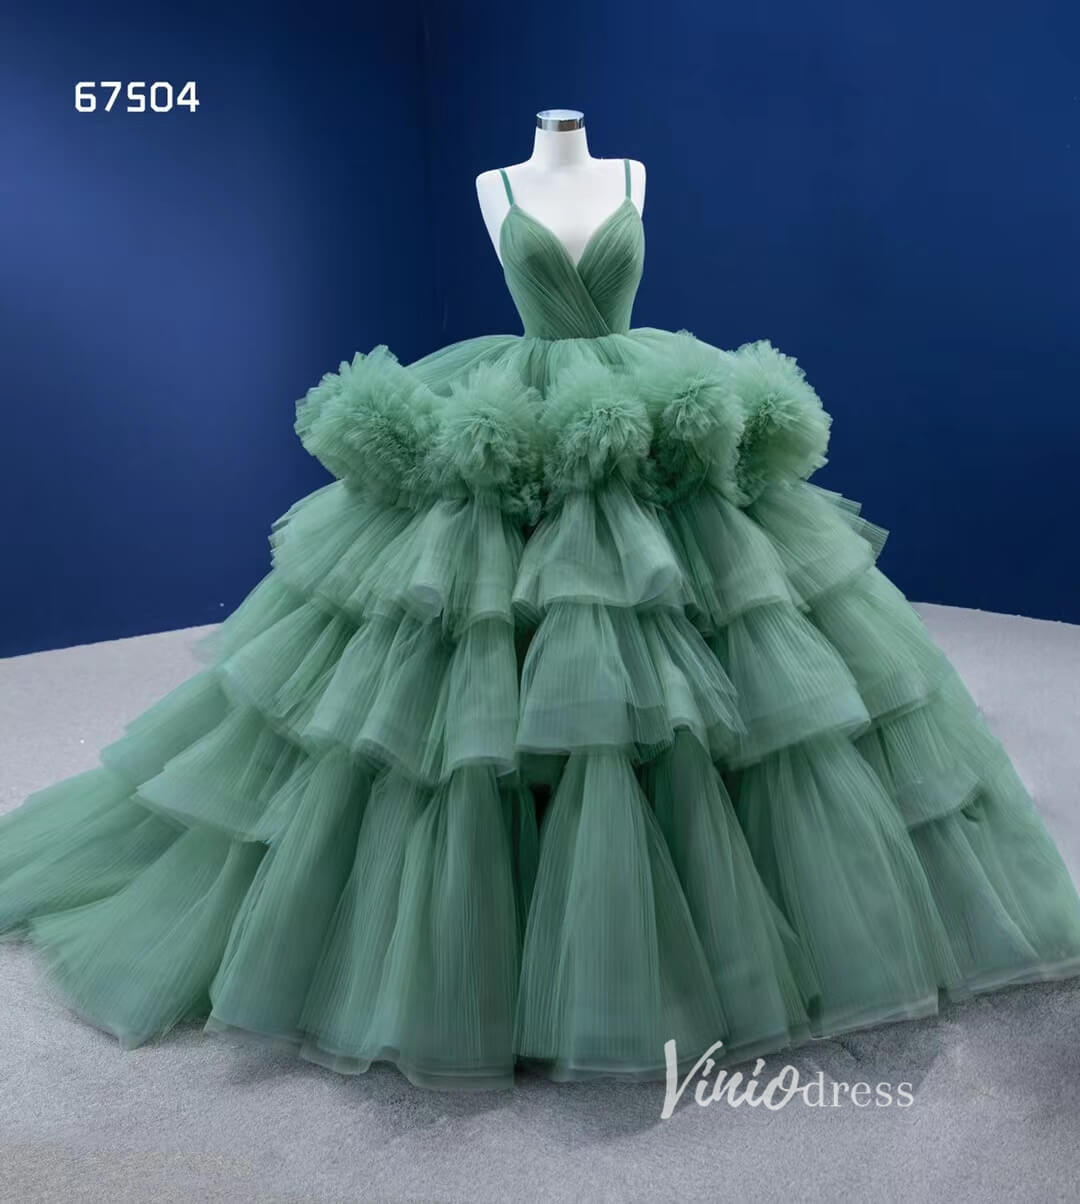 Luxury Layered Pageant Ball Gown Wedding Dress Spaghetti Strap 67504-Quinceanera Dresses-Viniodress-Viniodress